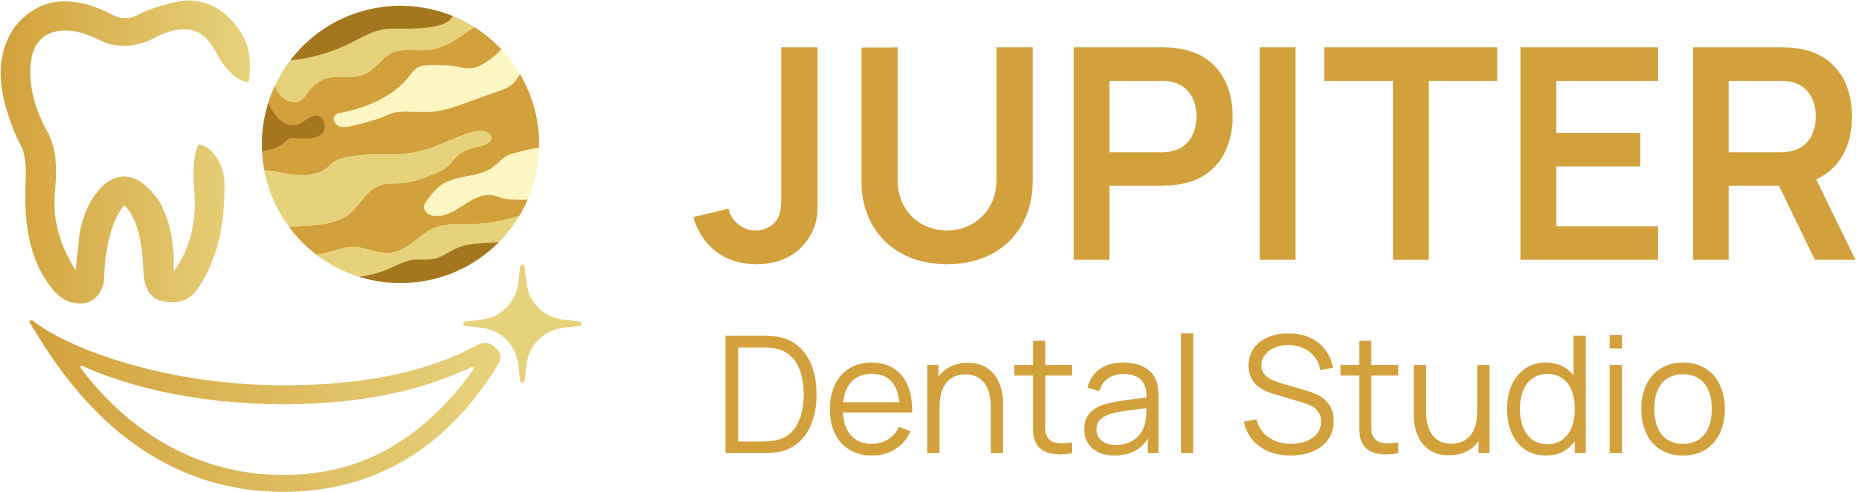 Cosmetic-Dentist - Odontología CosméticaFlorida Jupiter